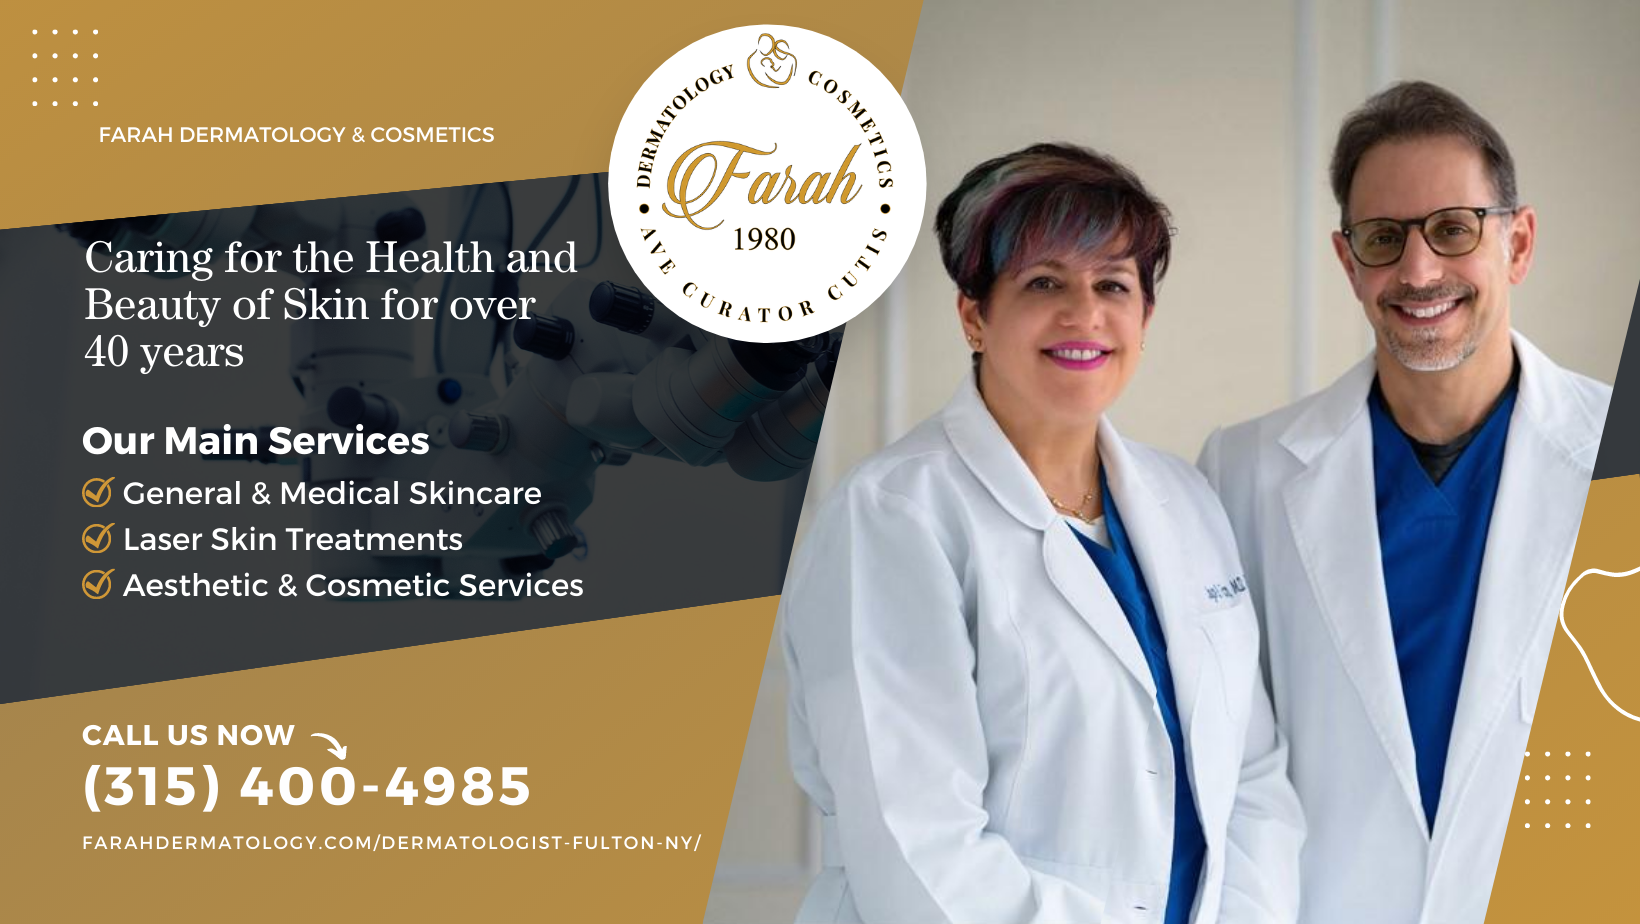 Farah Dermatology & Cosmetics | Dermatologist Fulton, New York 120 Cayuga St, Fulton New York 13069